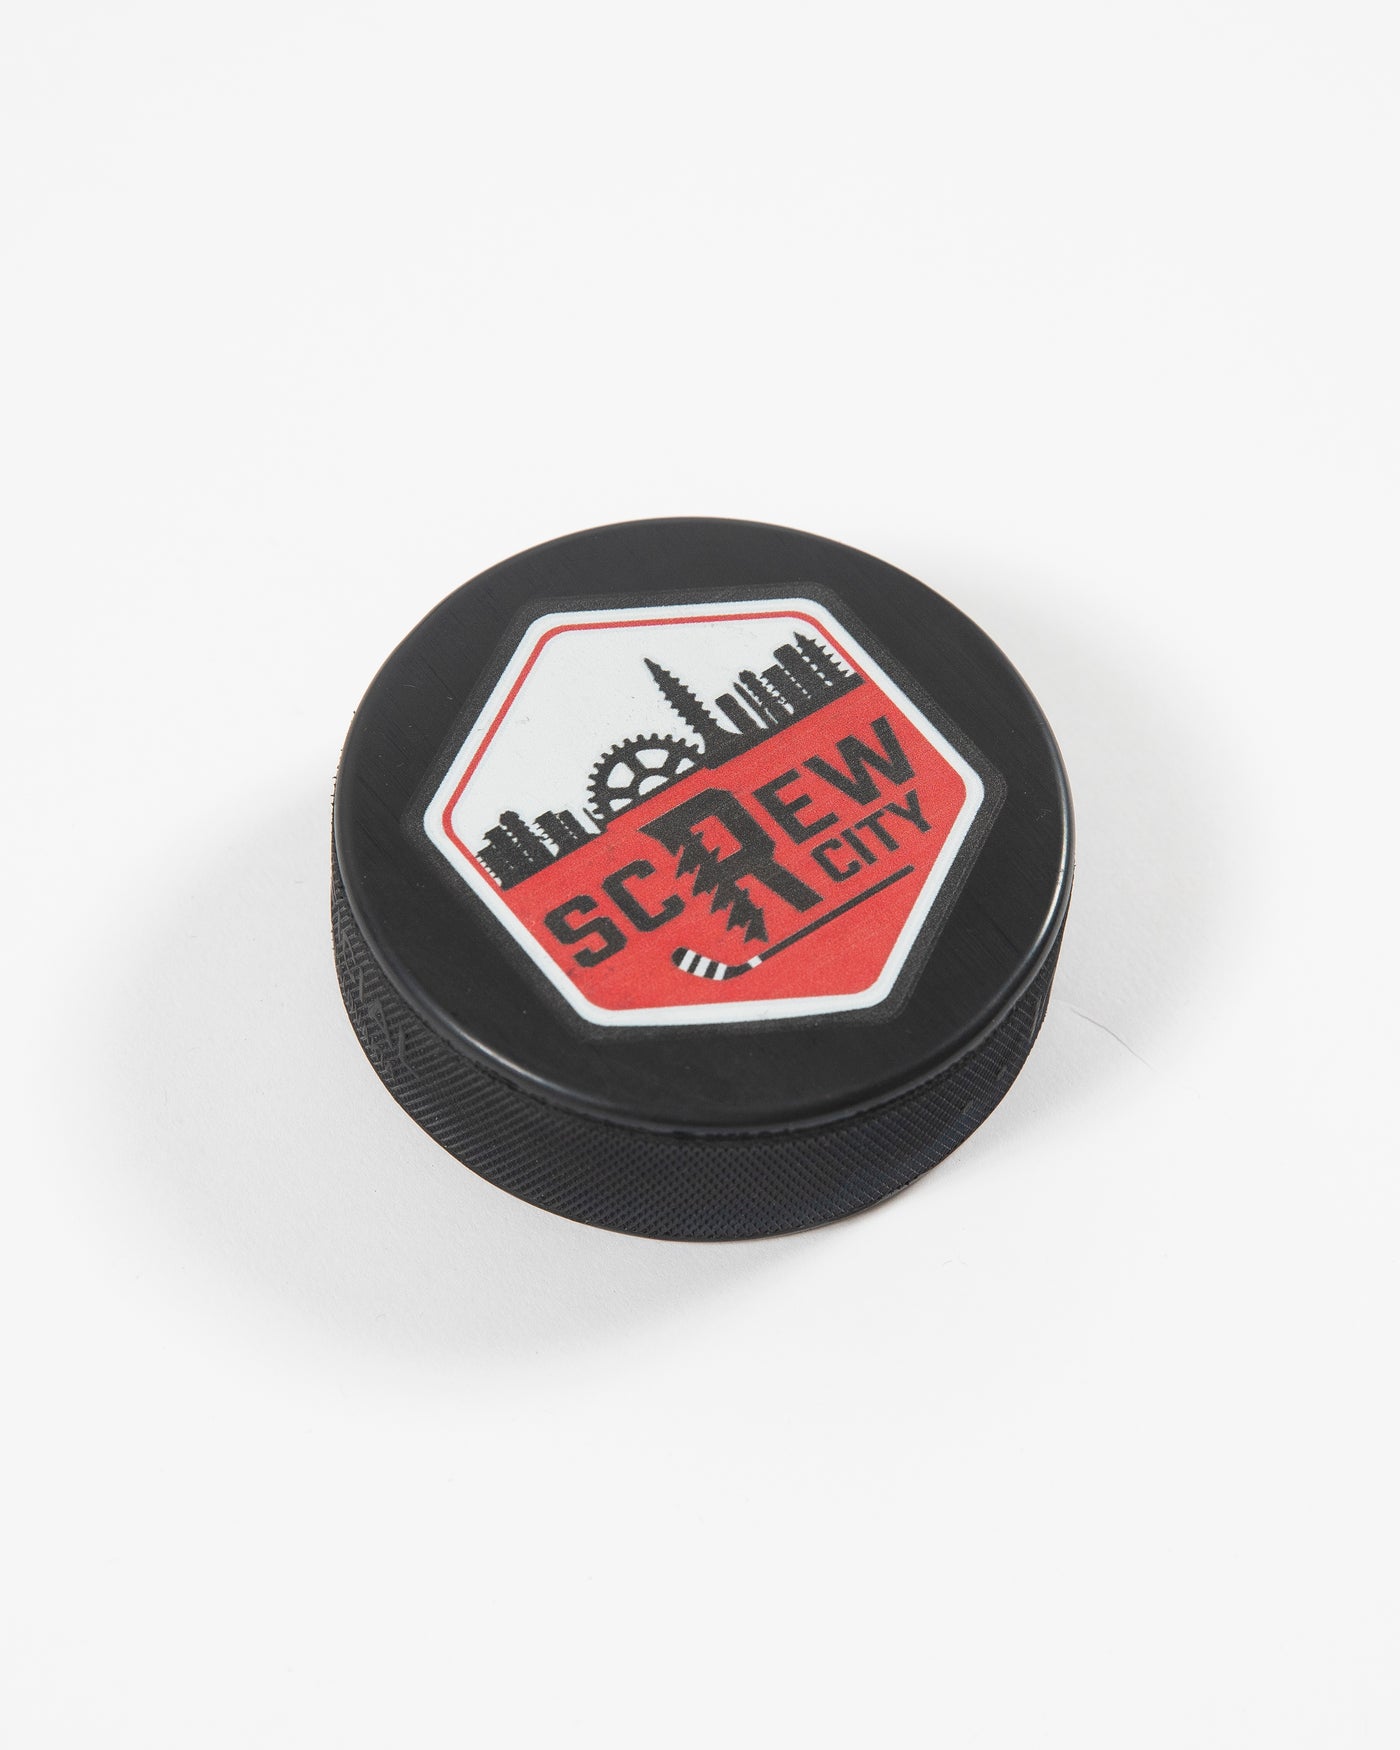 Black Rockford IceHogs Screw City hockey puck with screw skyline inspired design - angled lay flat